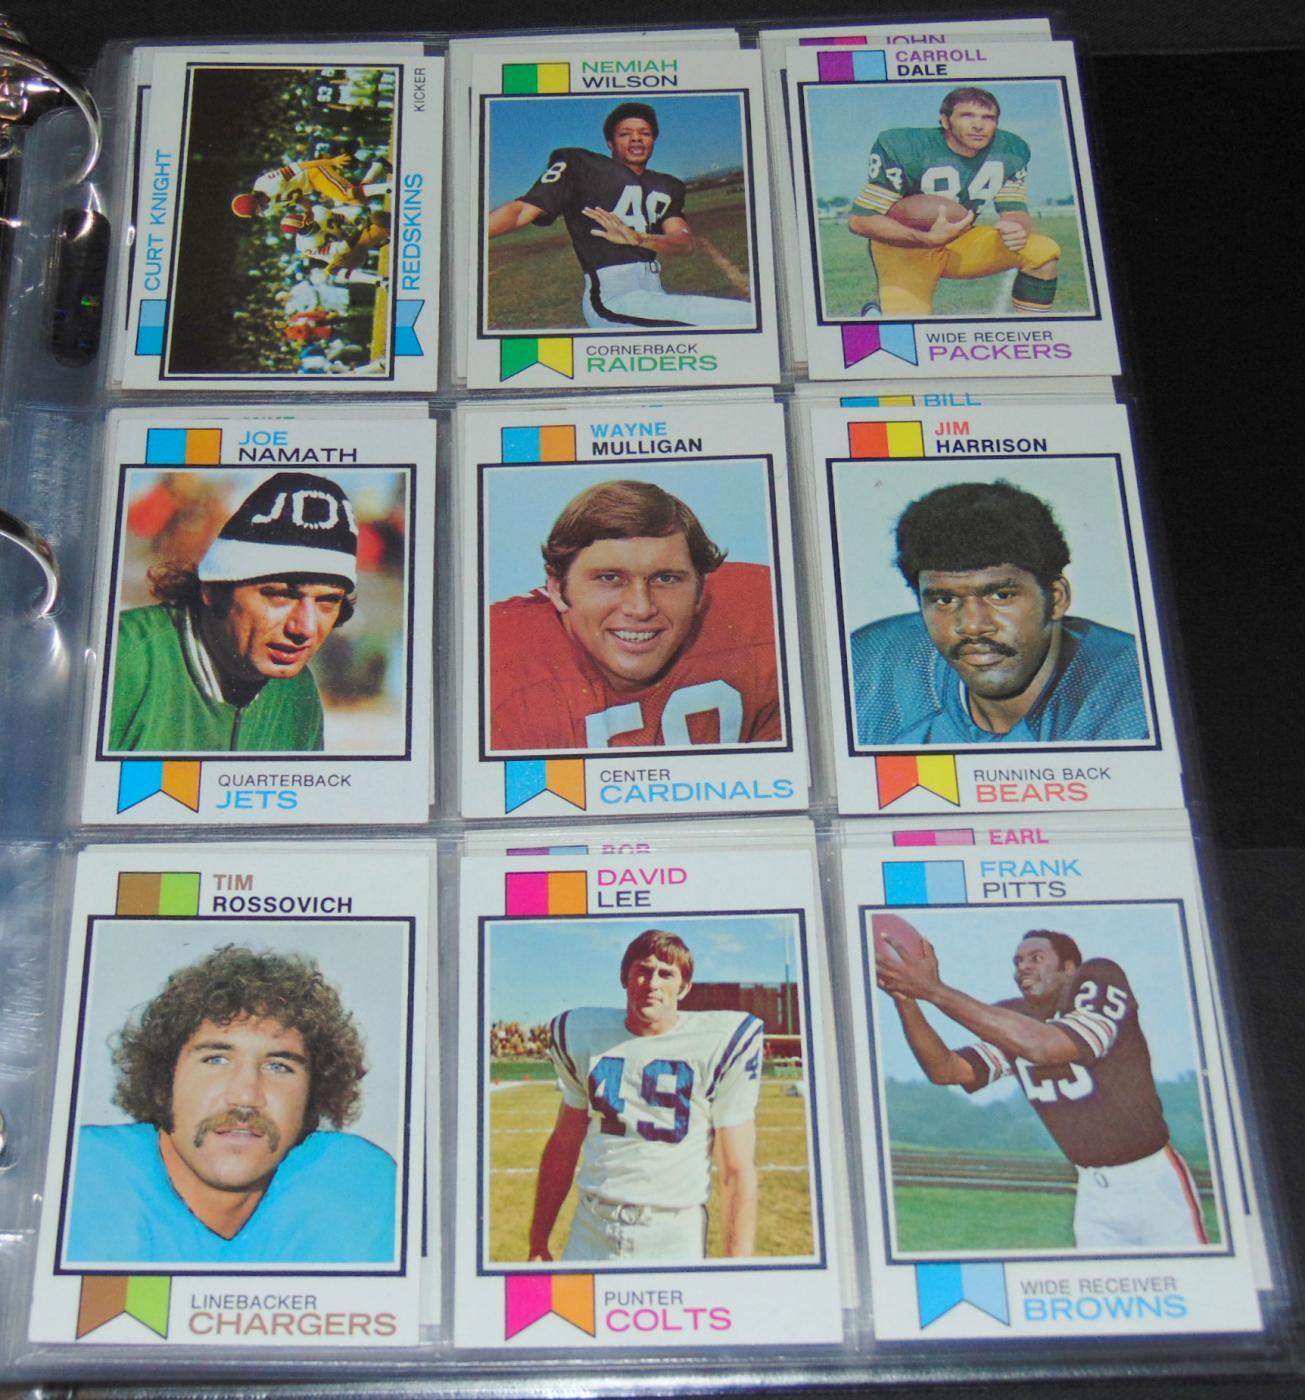 1973 Topps Football Card Set.